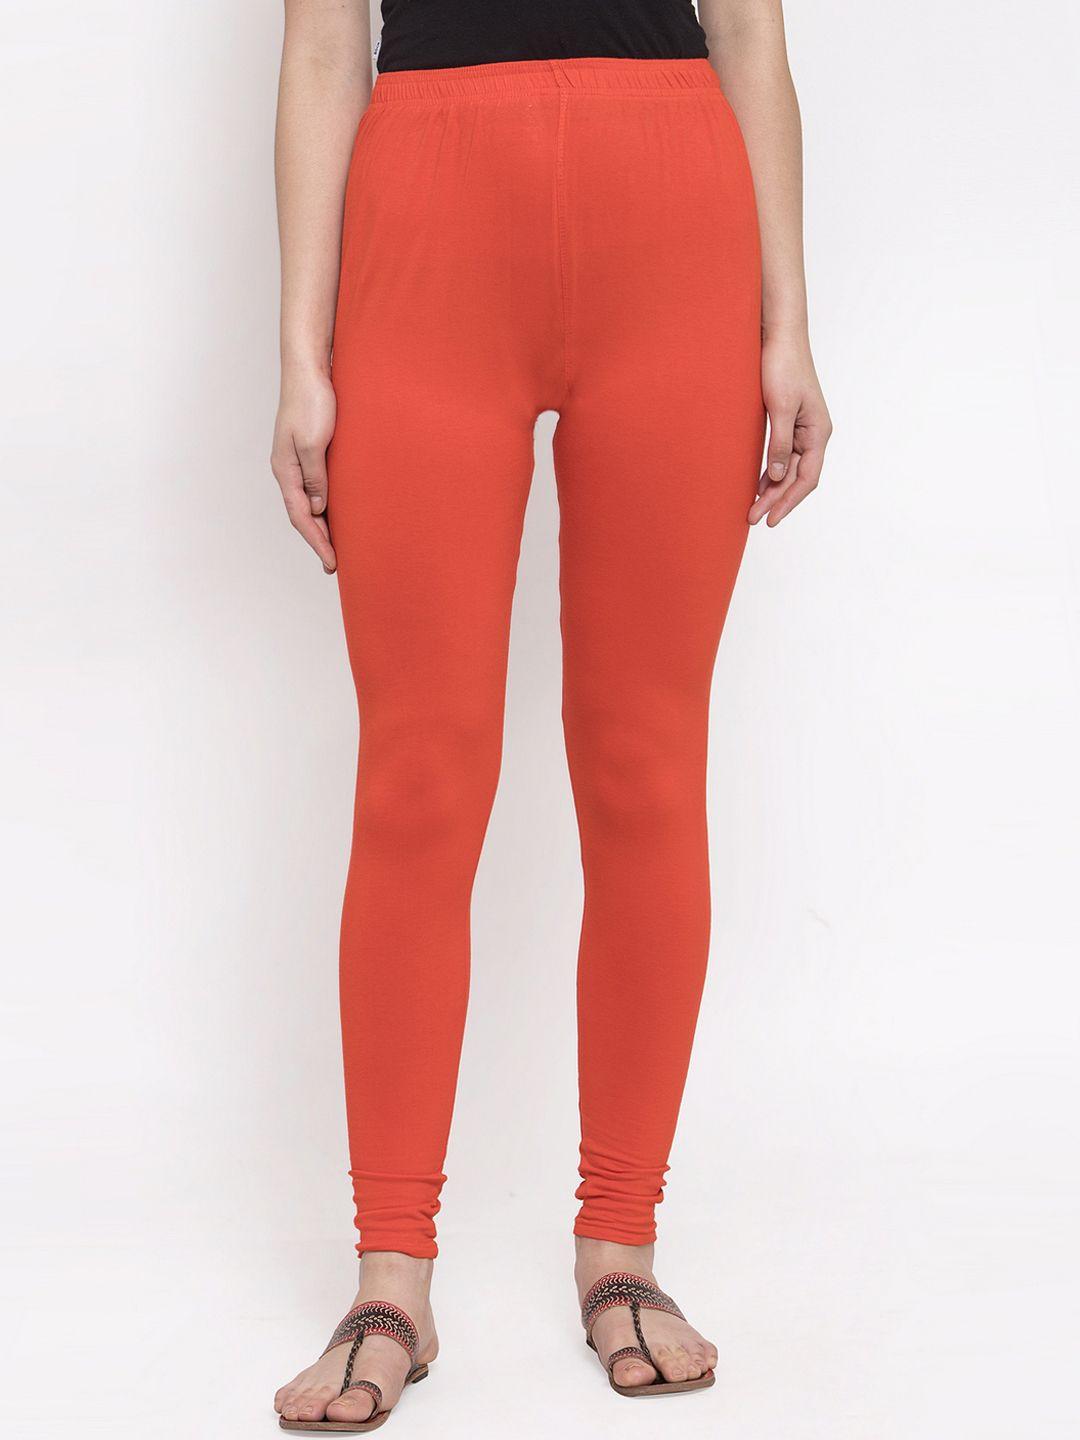 tag 7 women orange solid churidar-length leggings